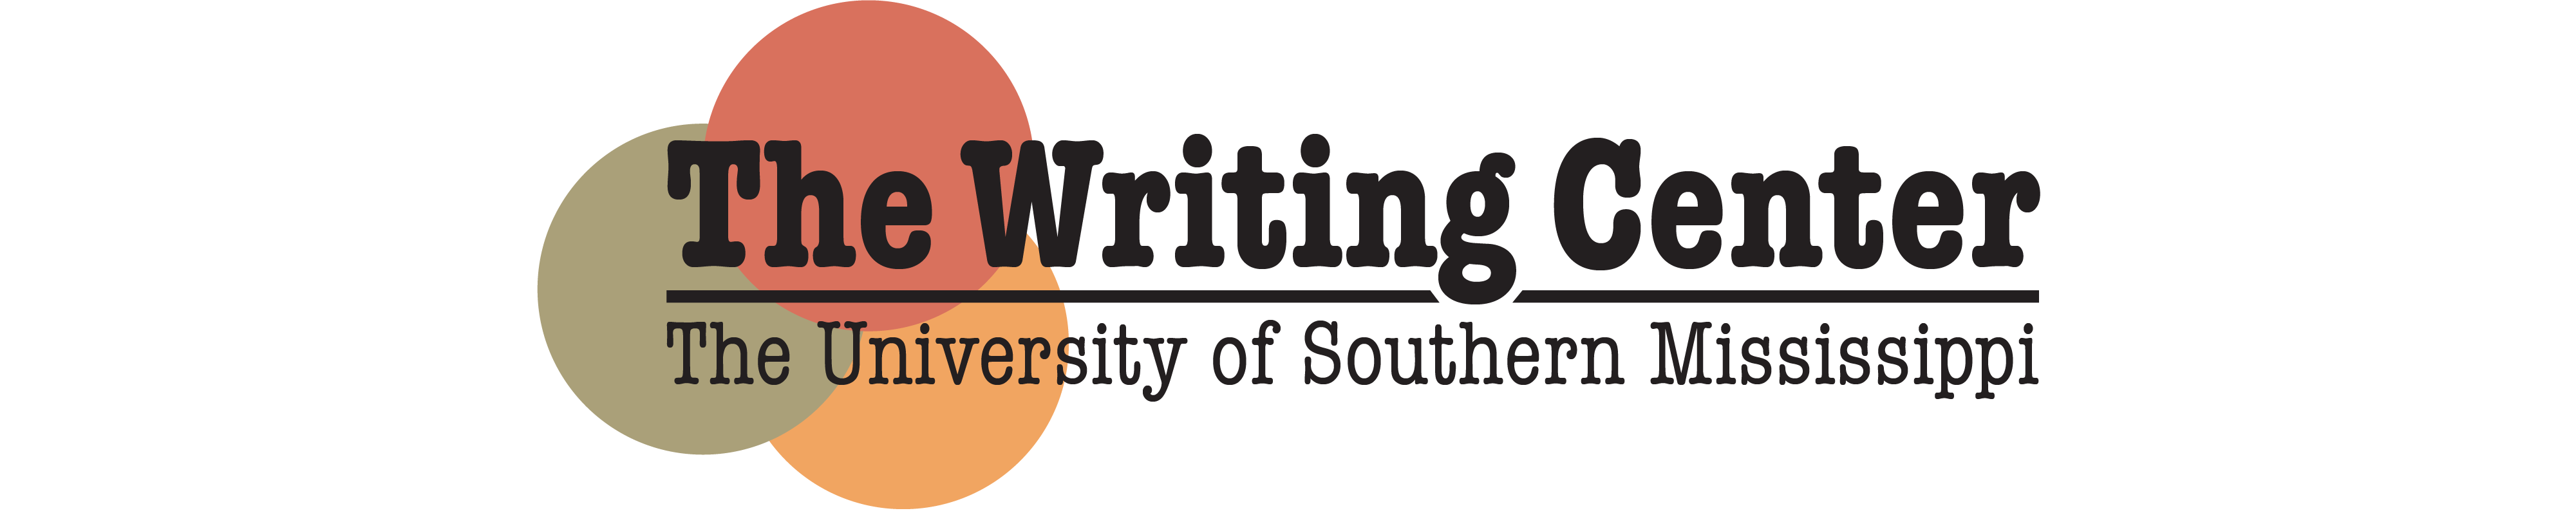 Writing Center Web Banner